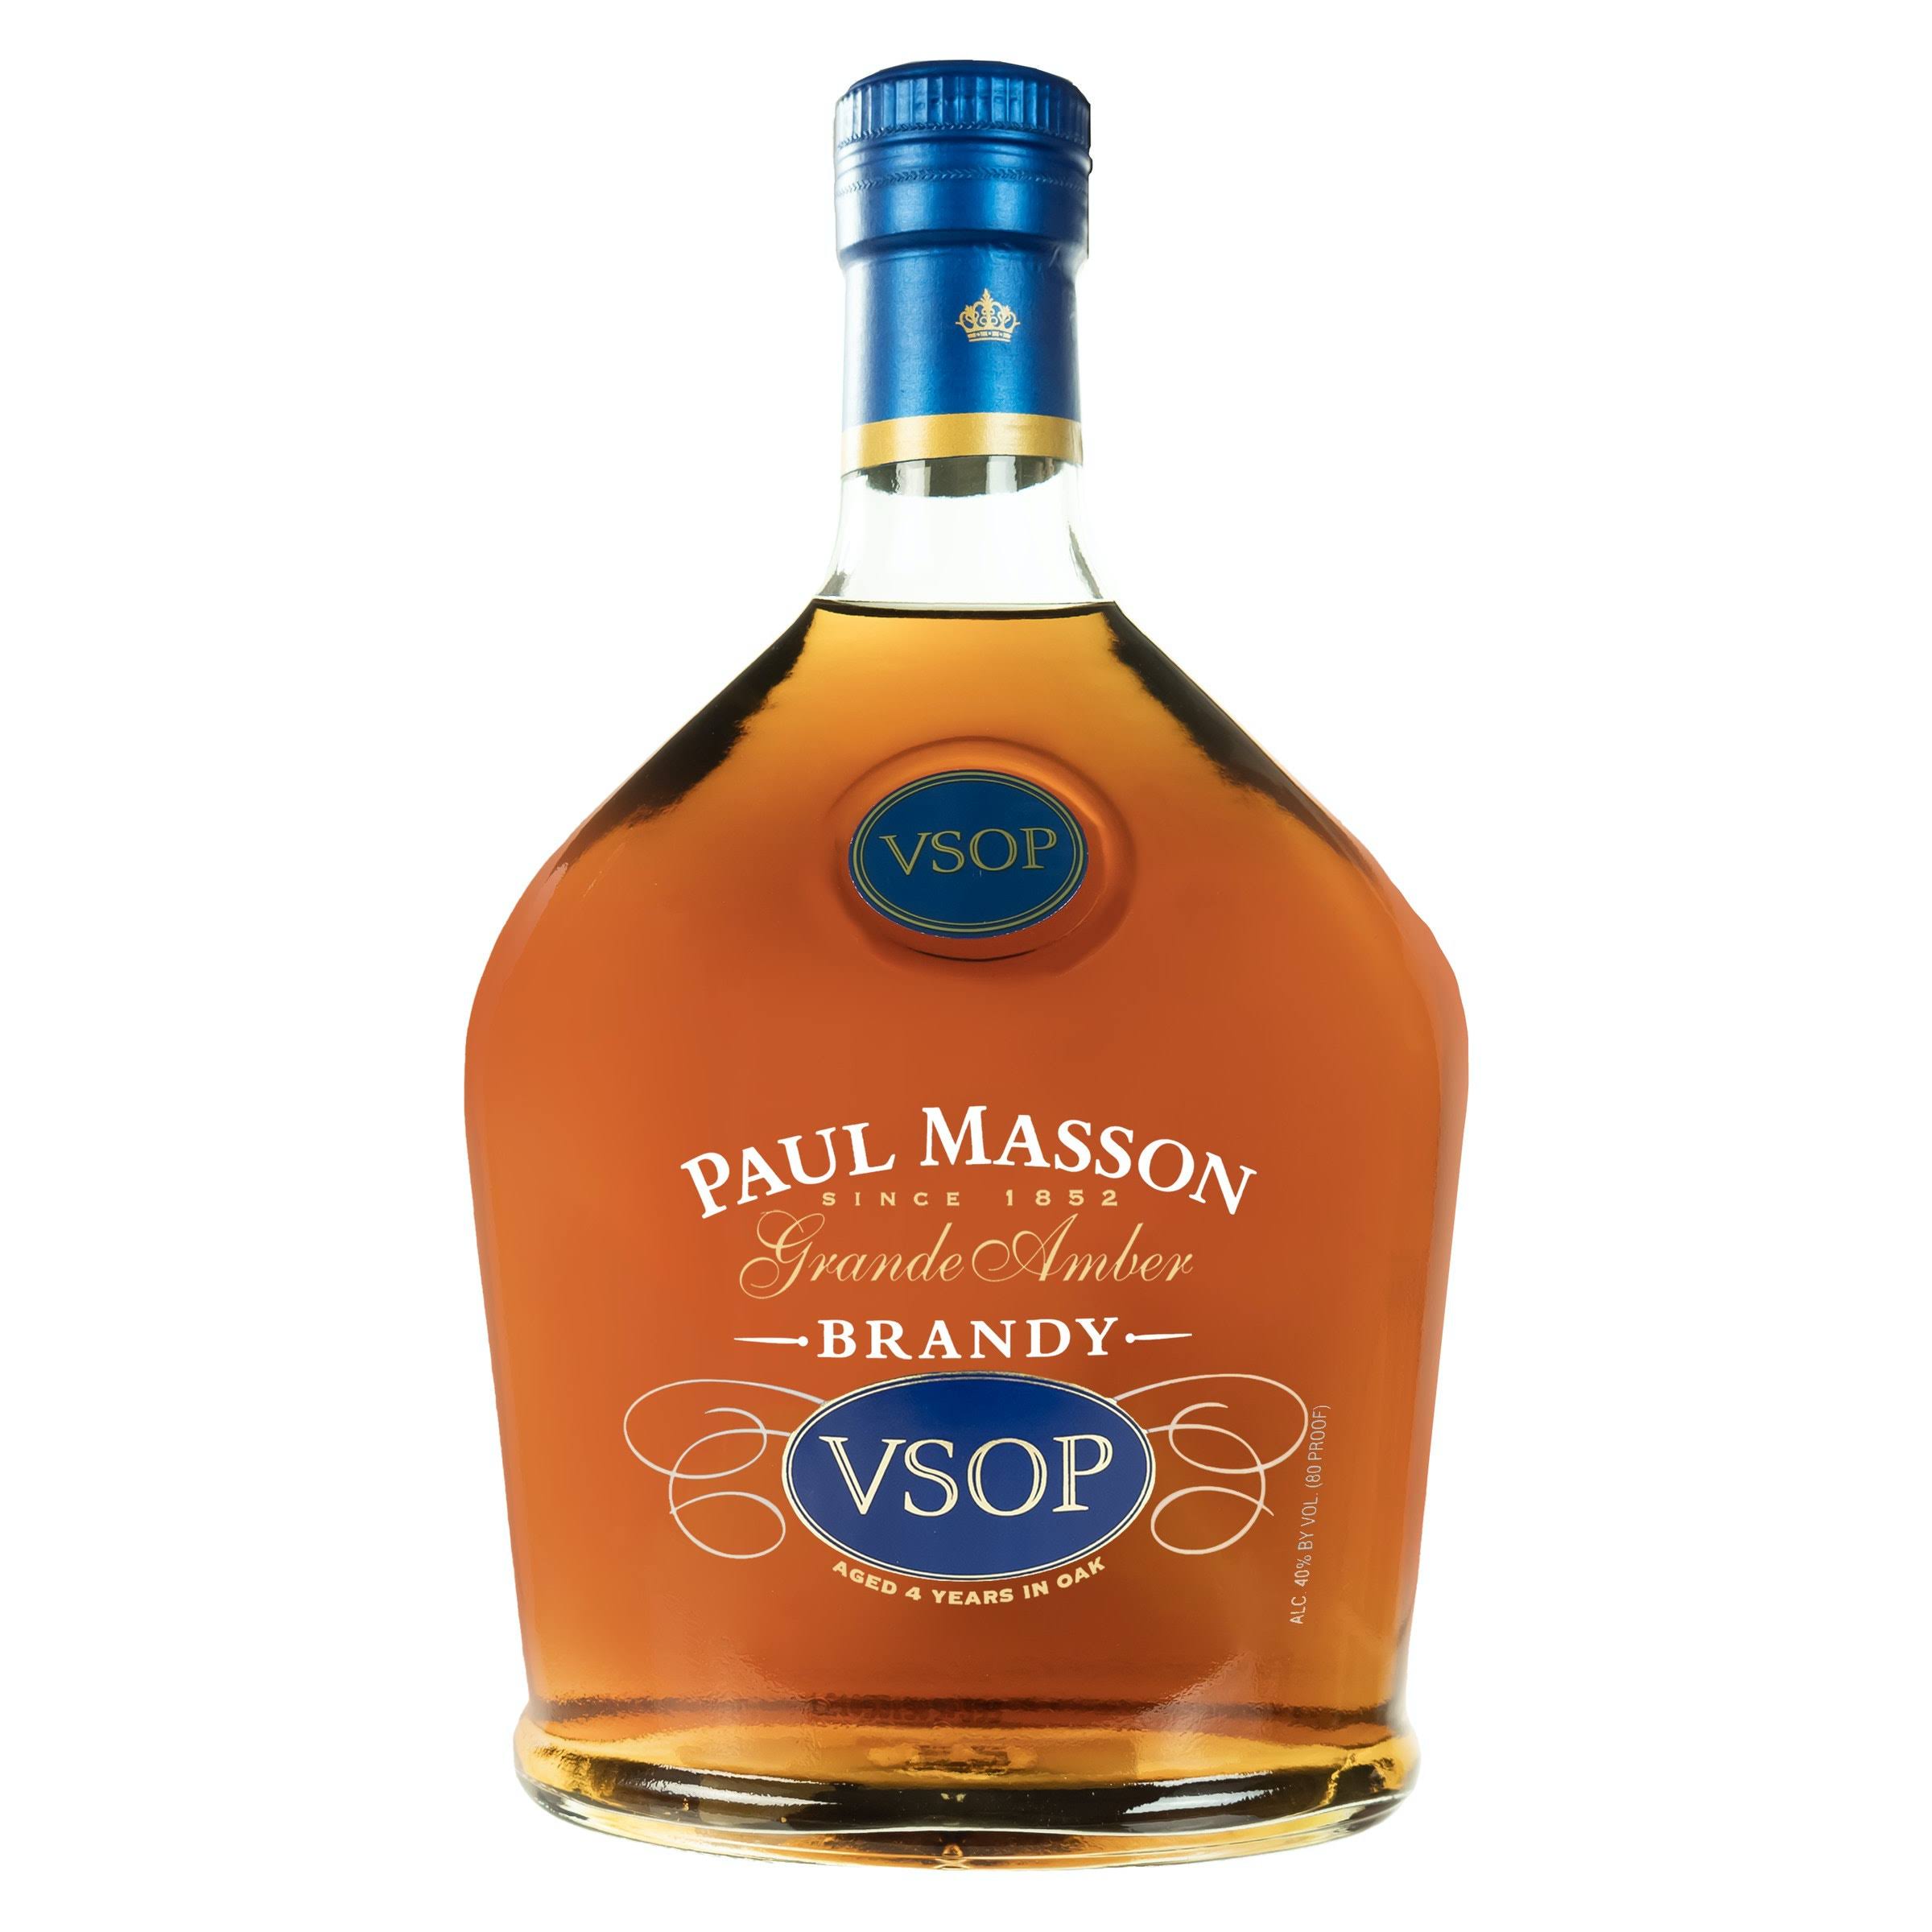 Paul Masson VSOP Brandy - 750 ml bottle